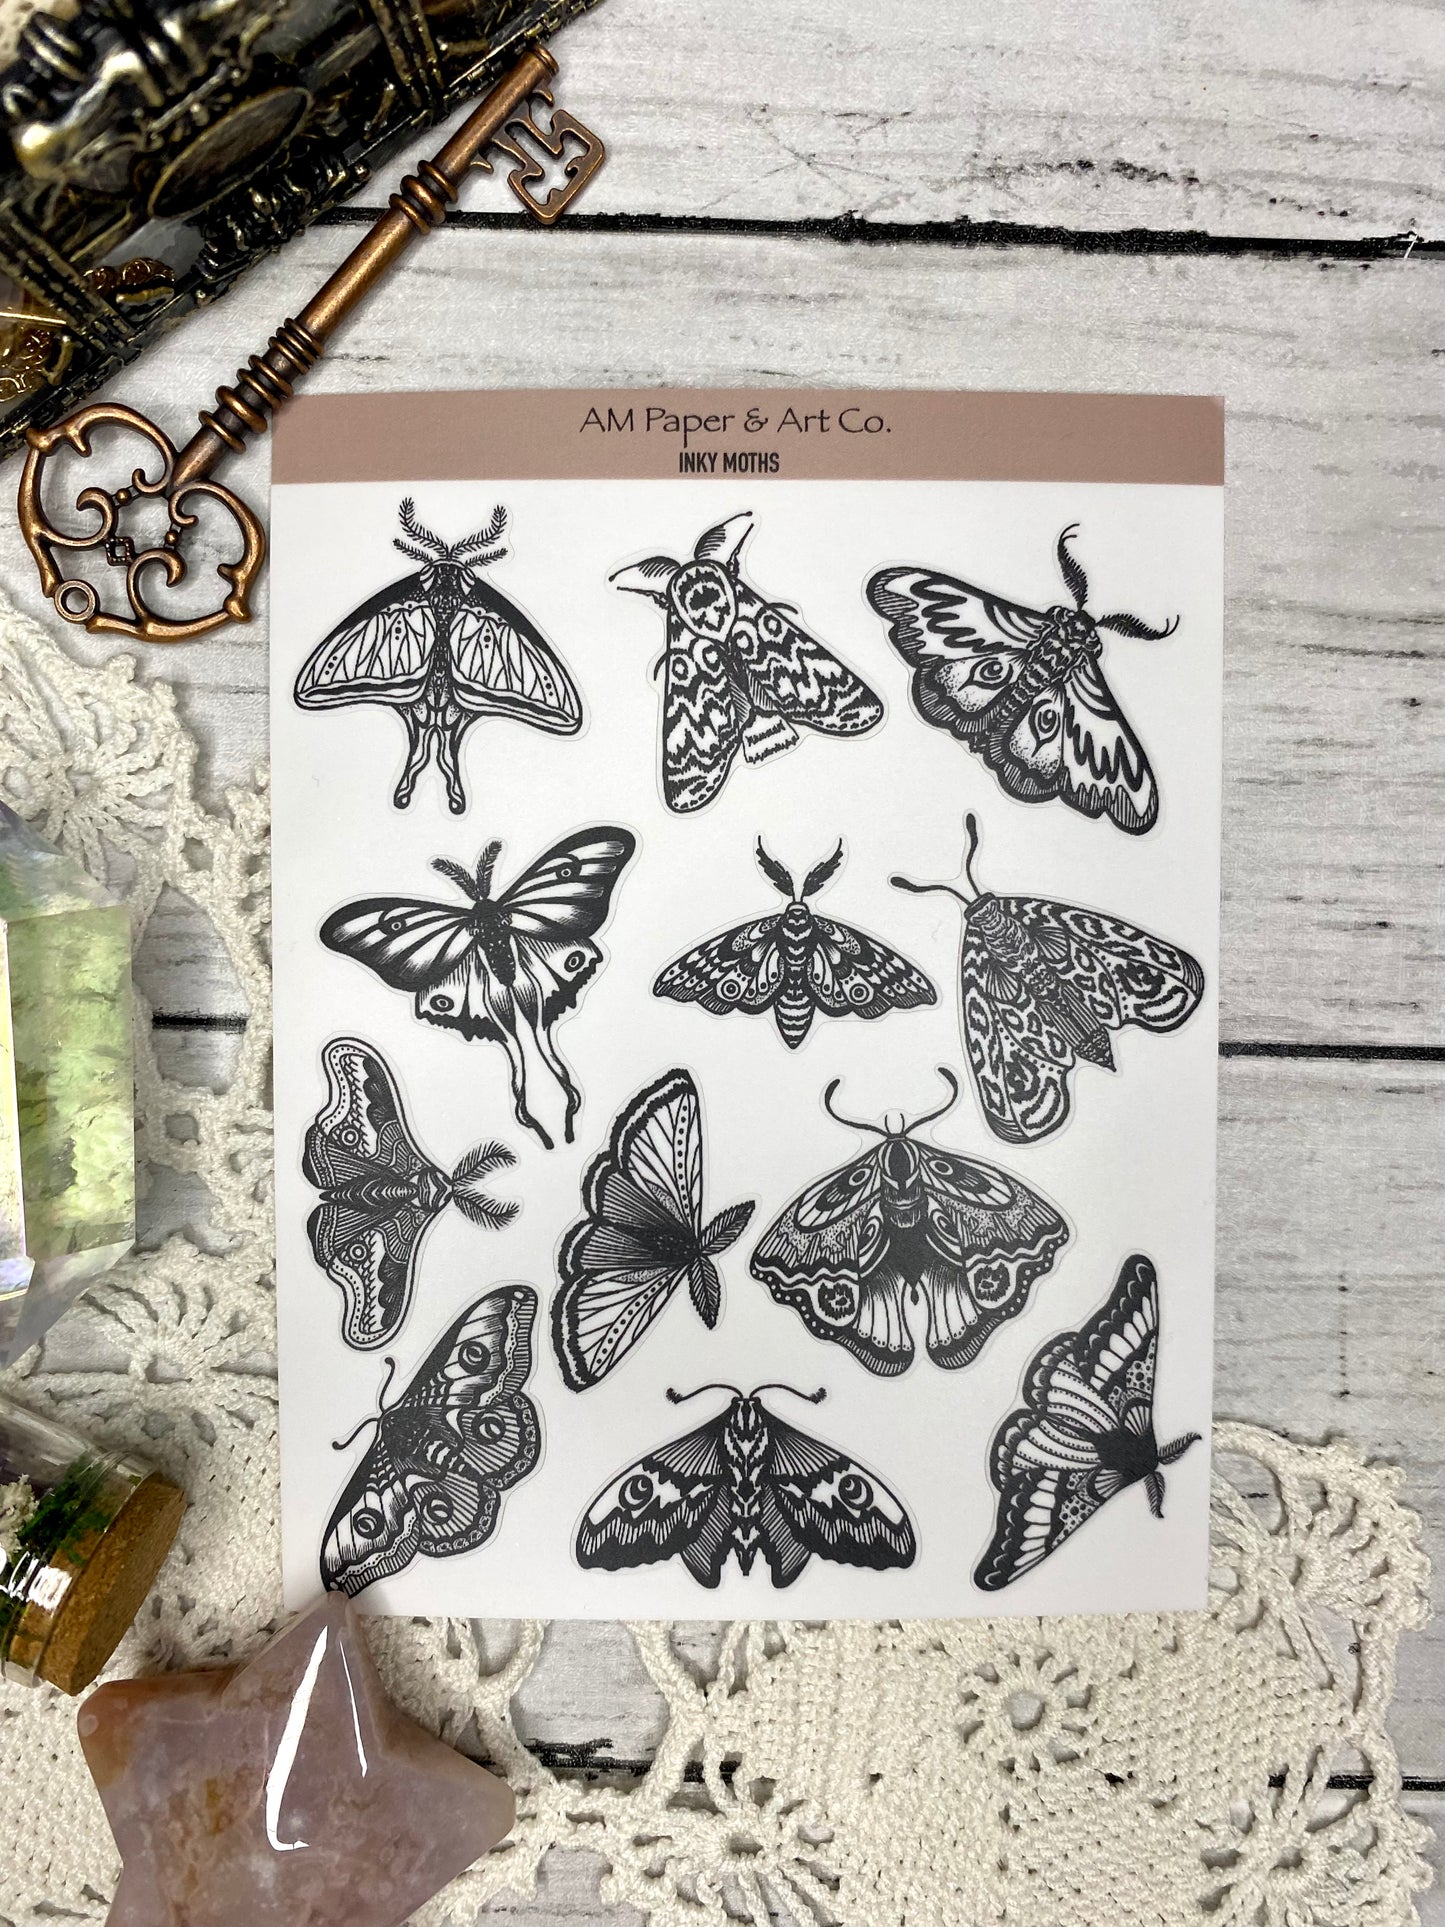 Inky Moths Stickers